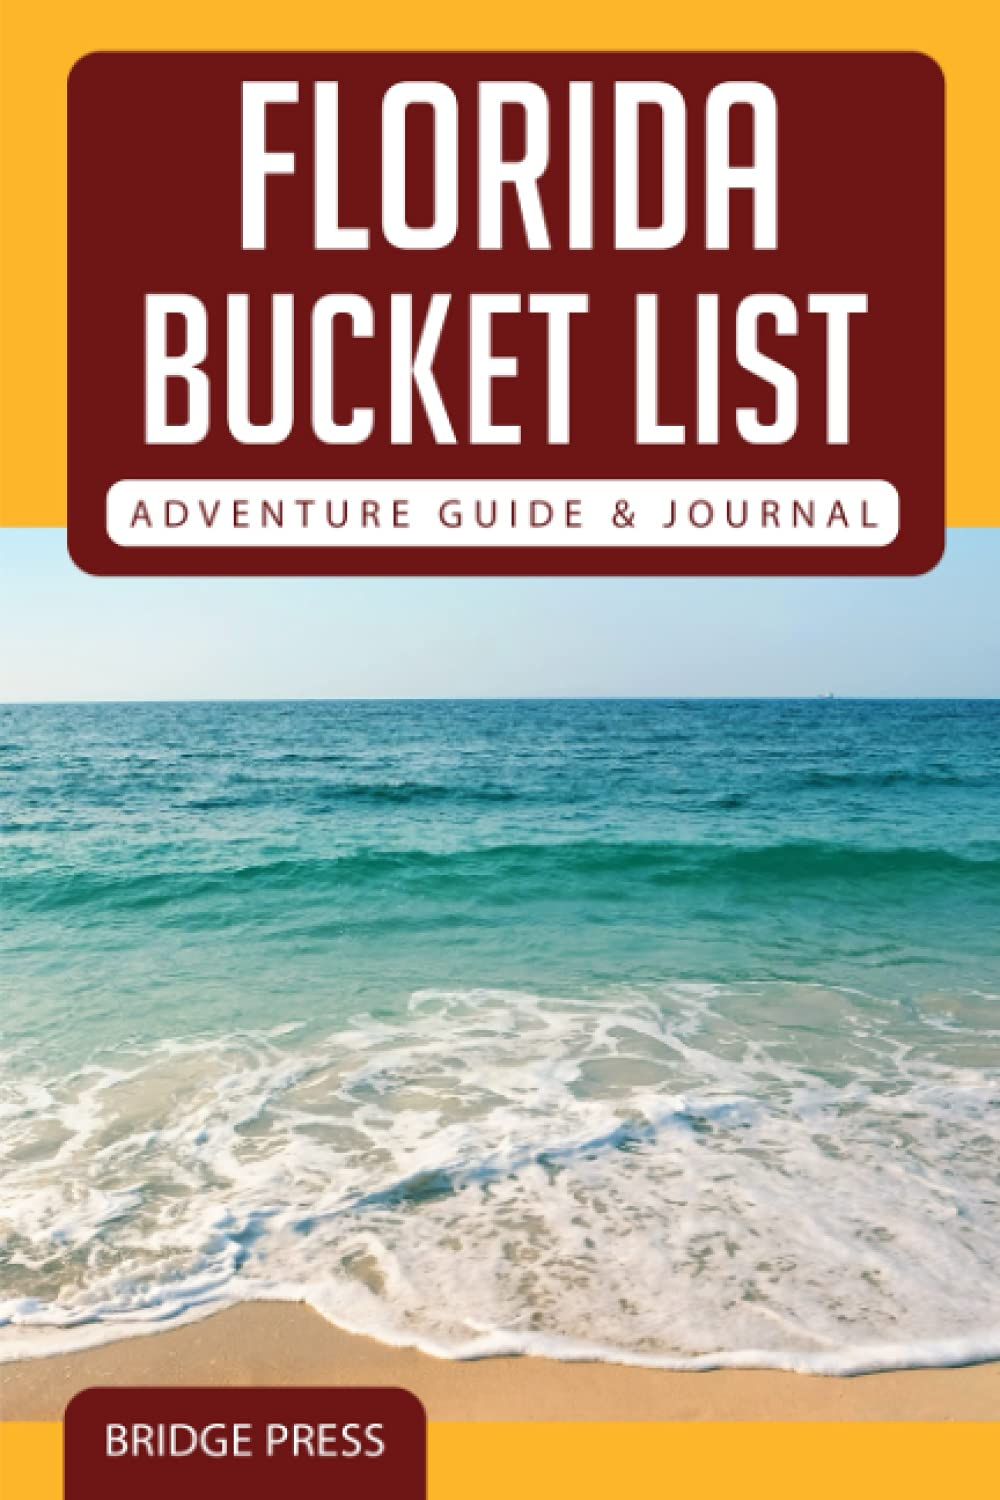 florida bucketlist journal and guide